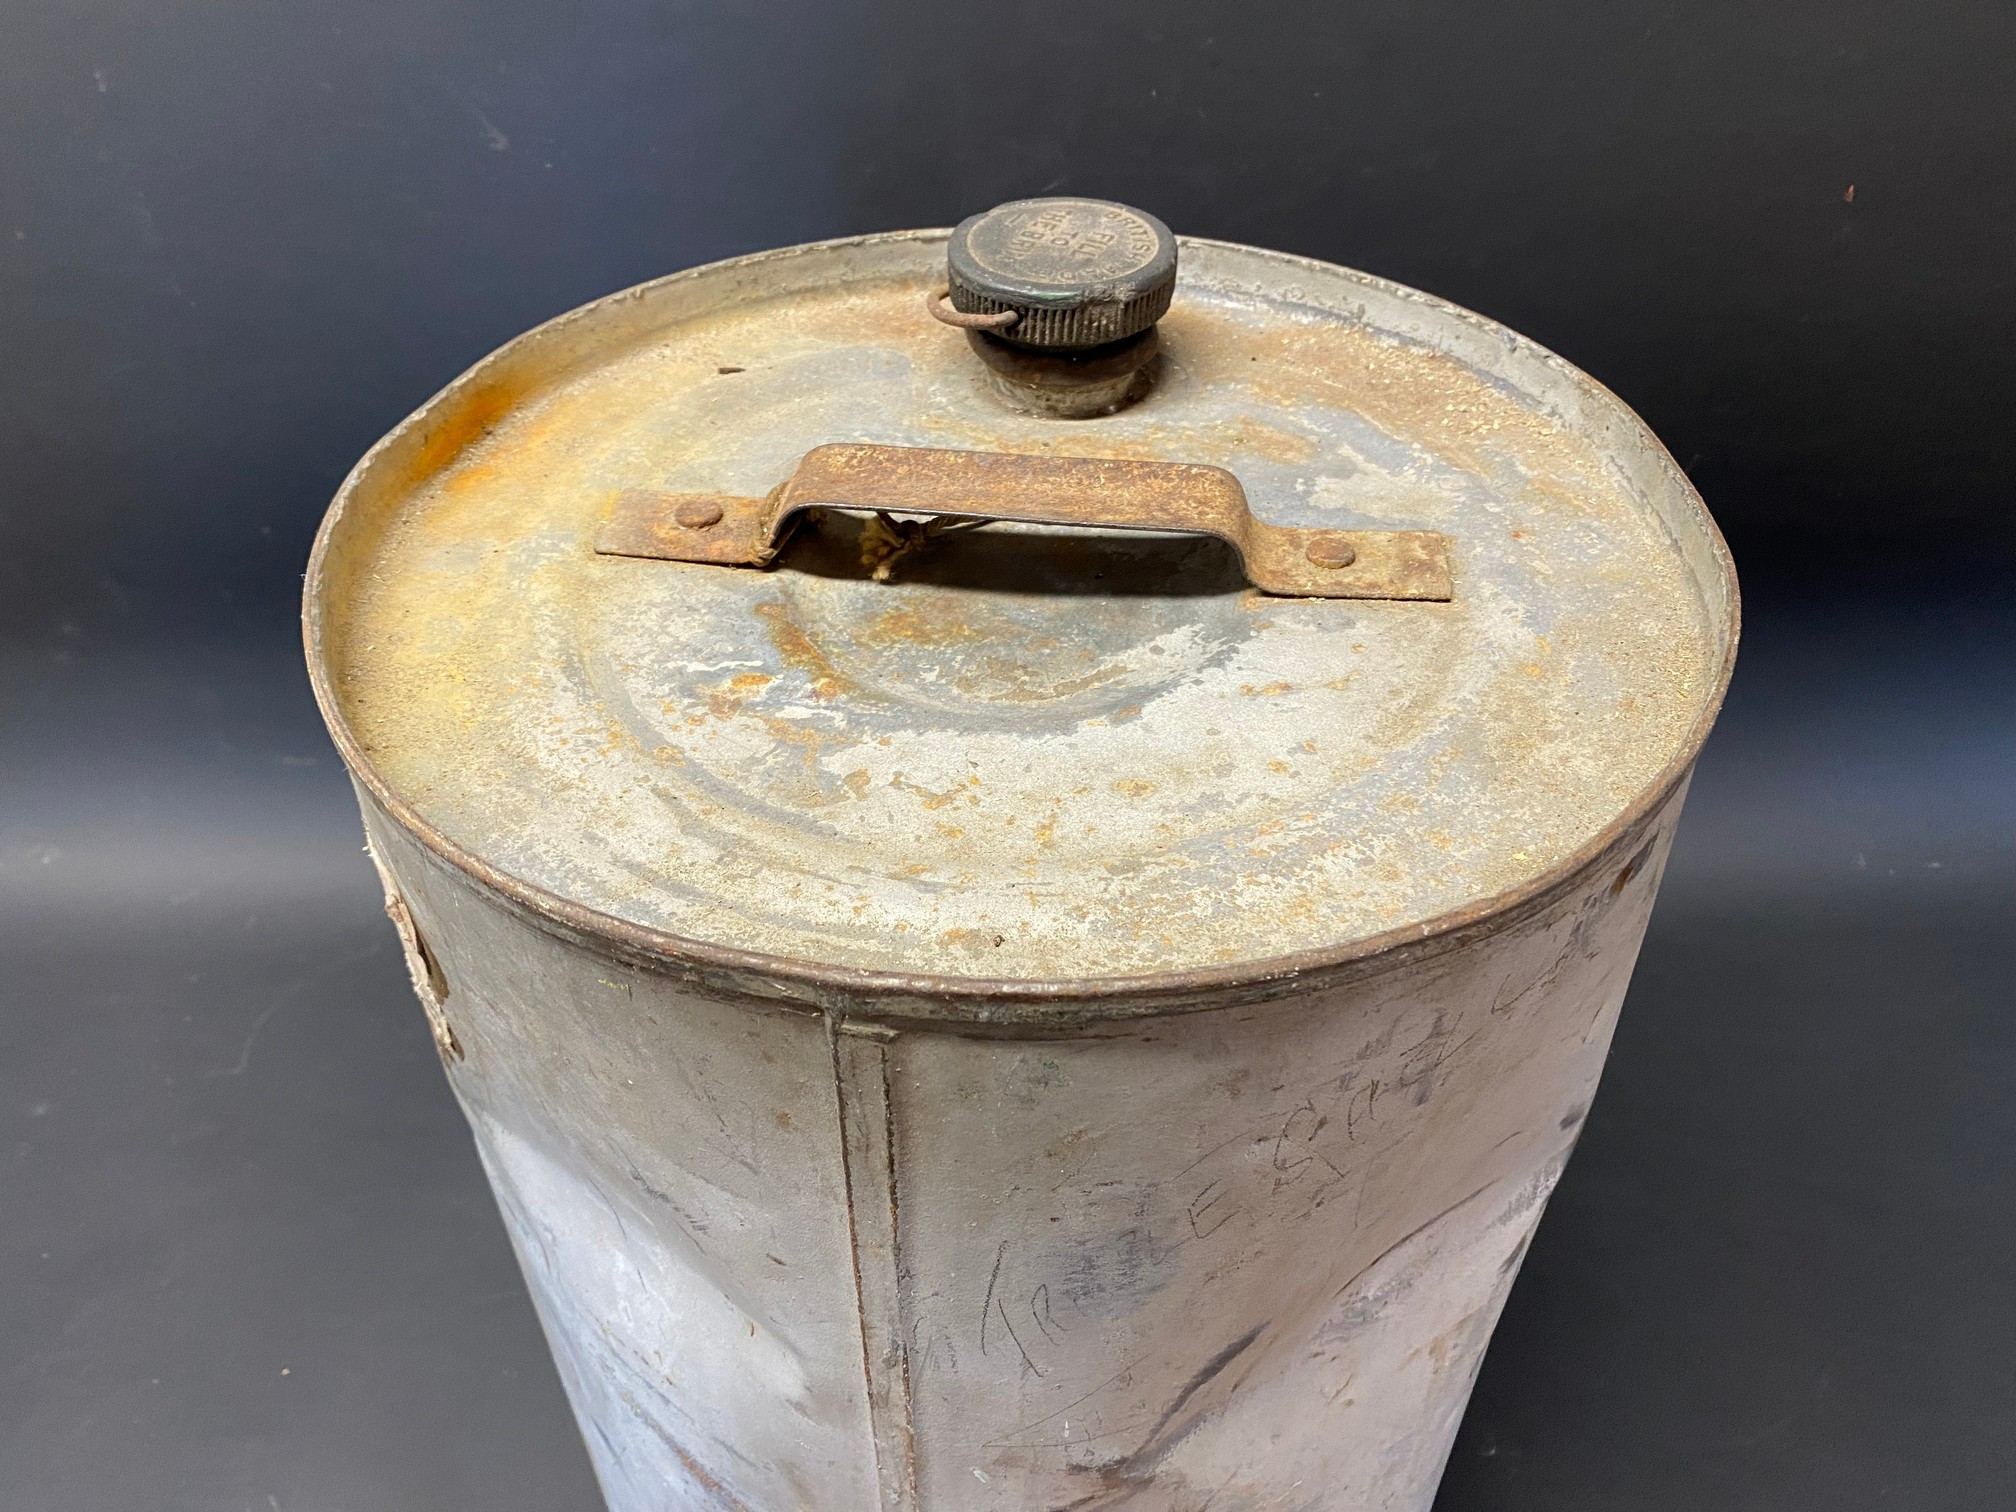 A Duckhams Morrisol Sirrom five gallon drum. - Image 3 of 3